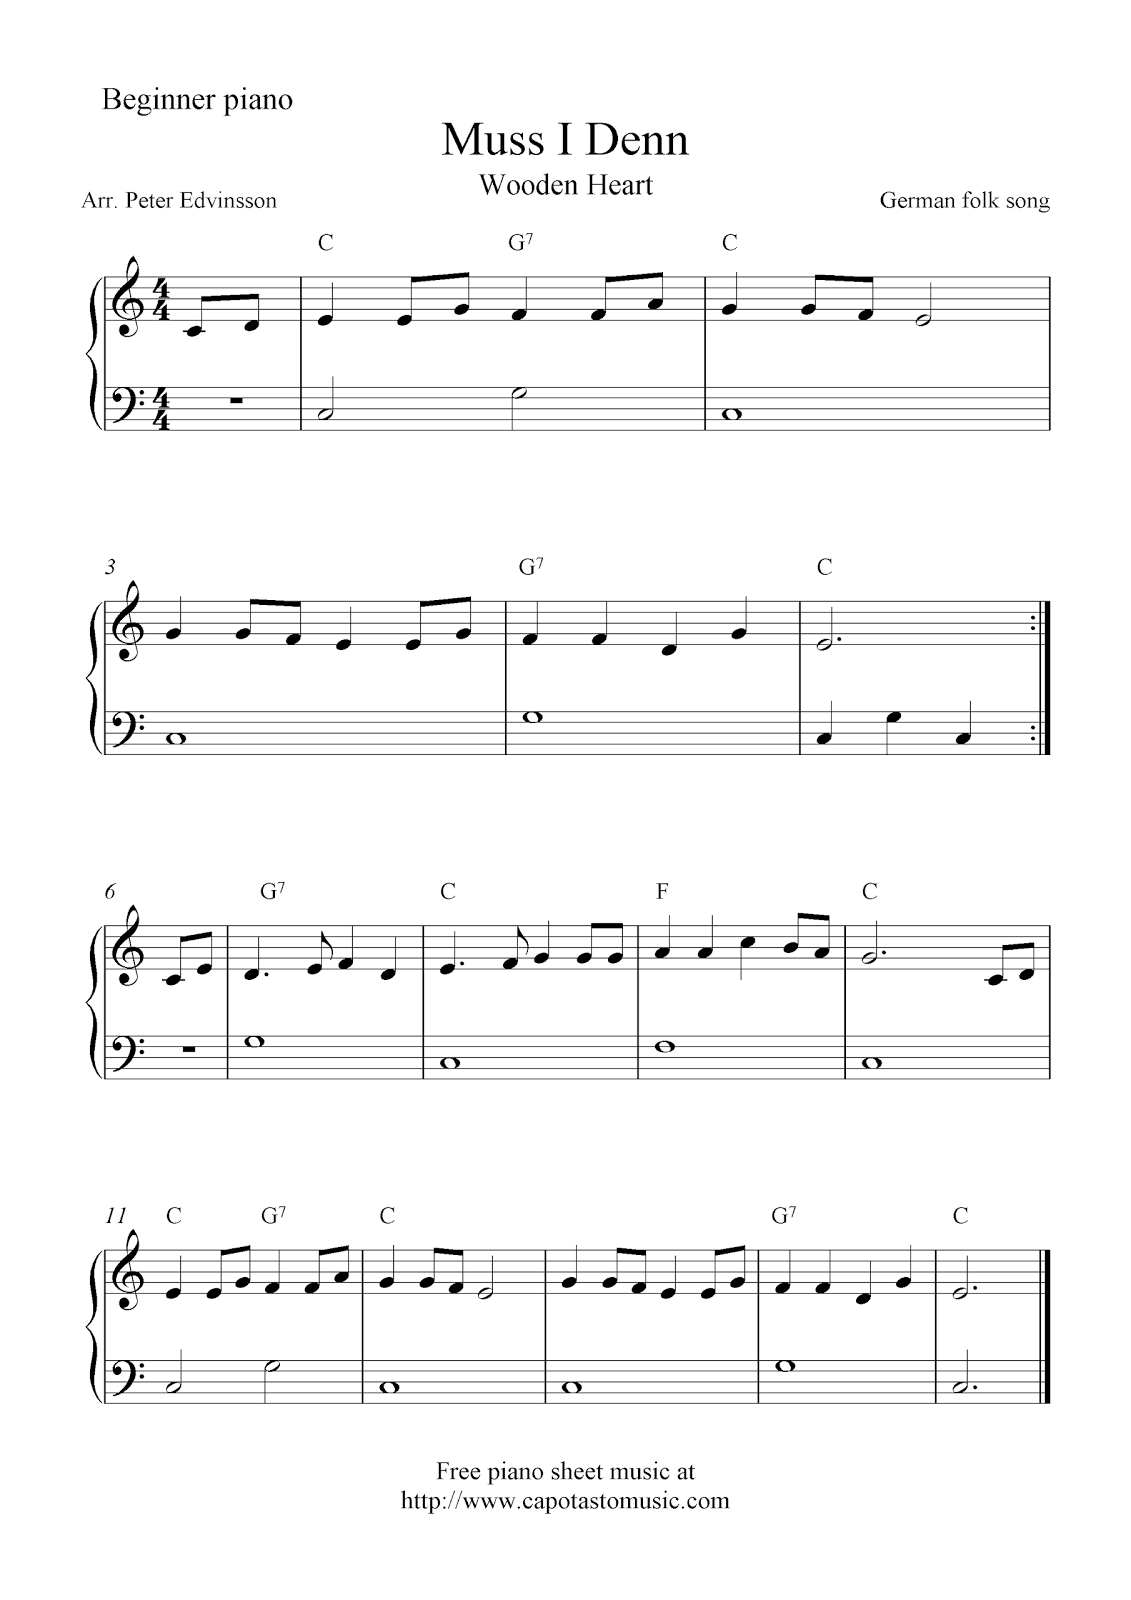 Free easy piano sheet music for beginners, Muss I Denn (Wooden Heart)